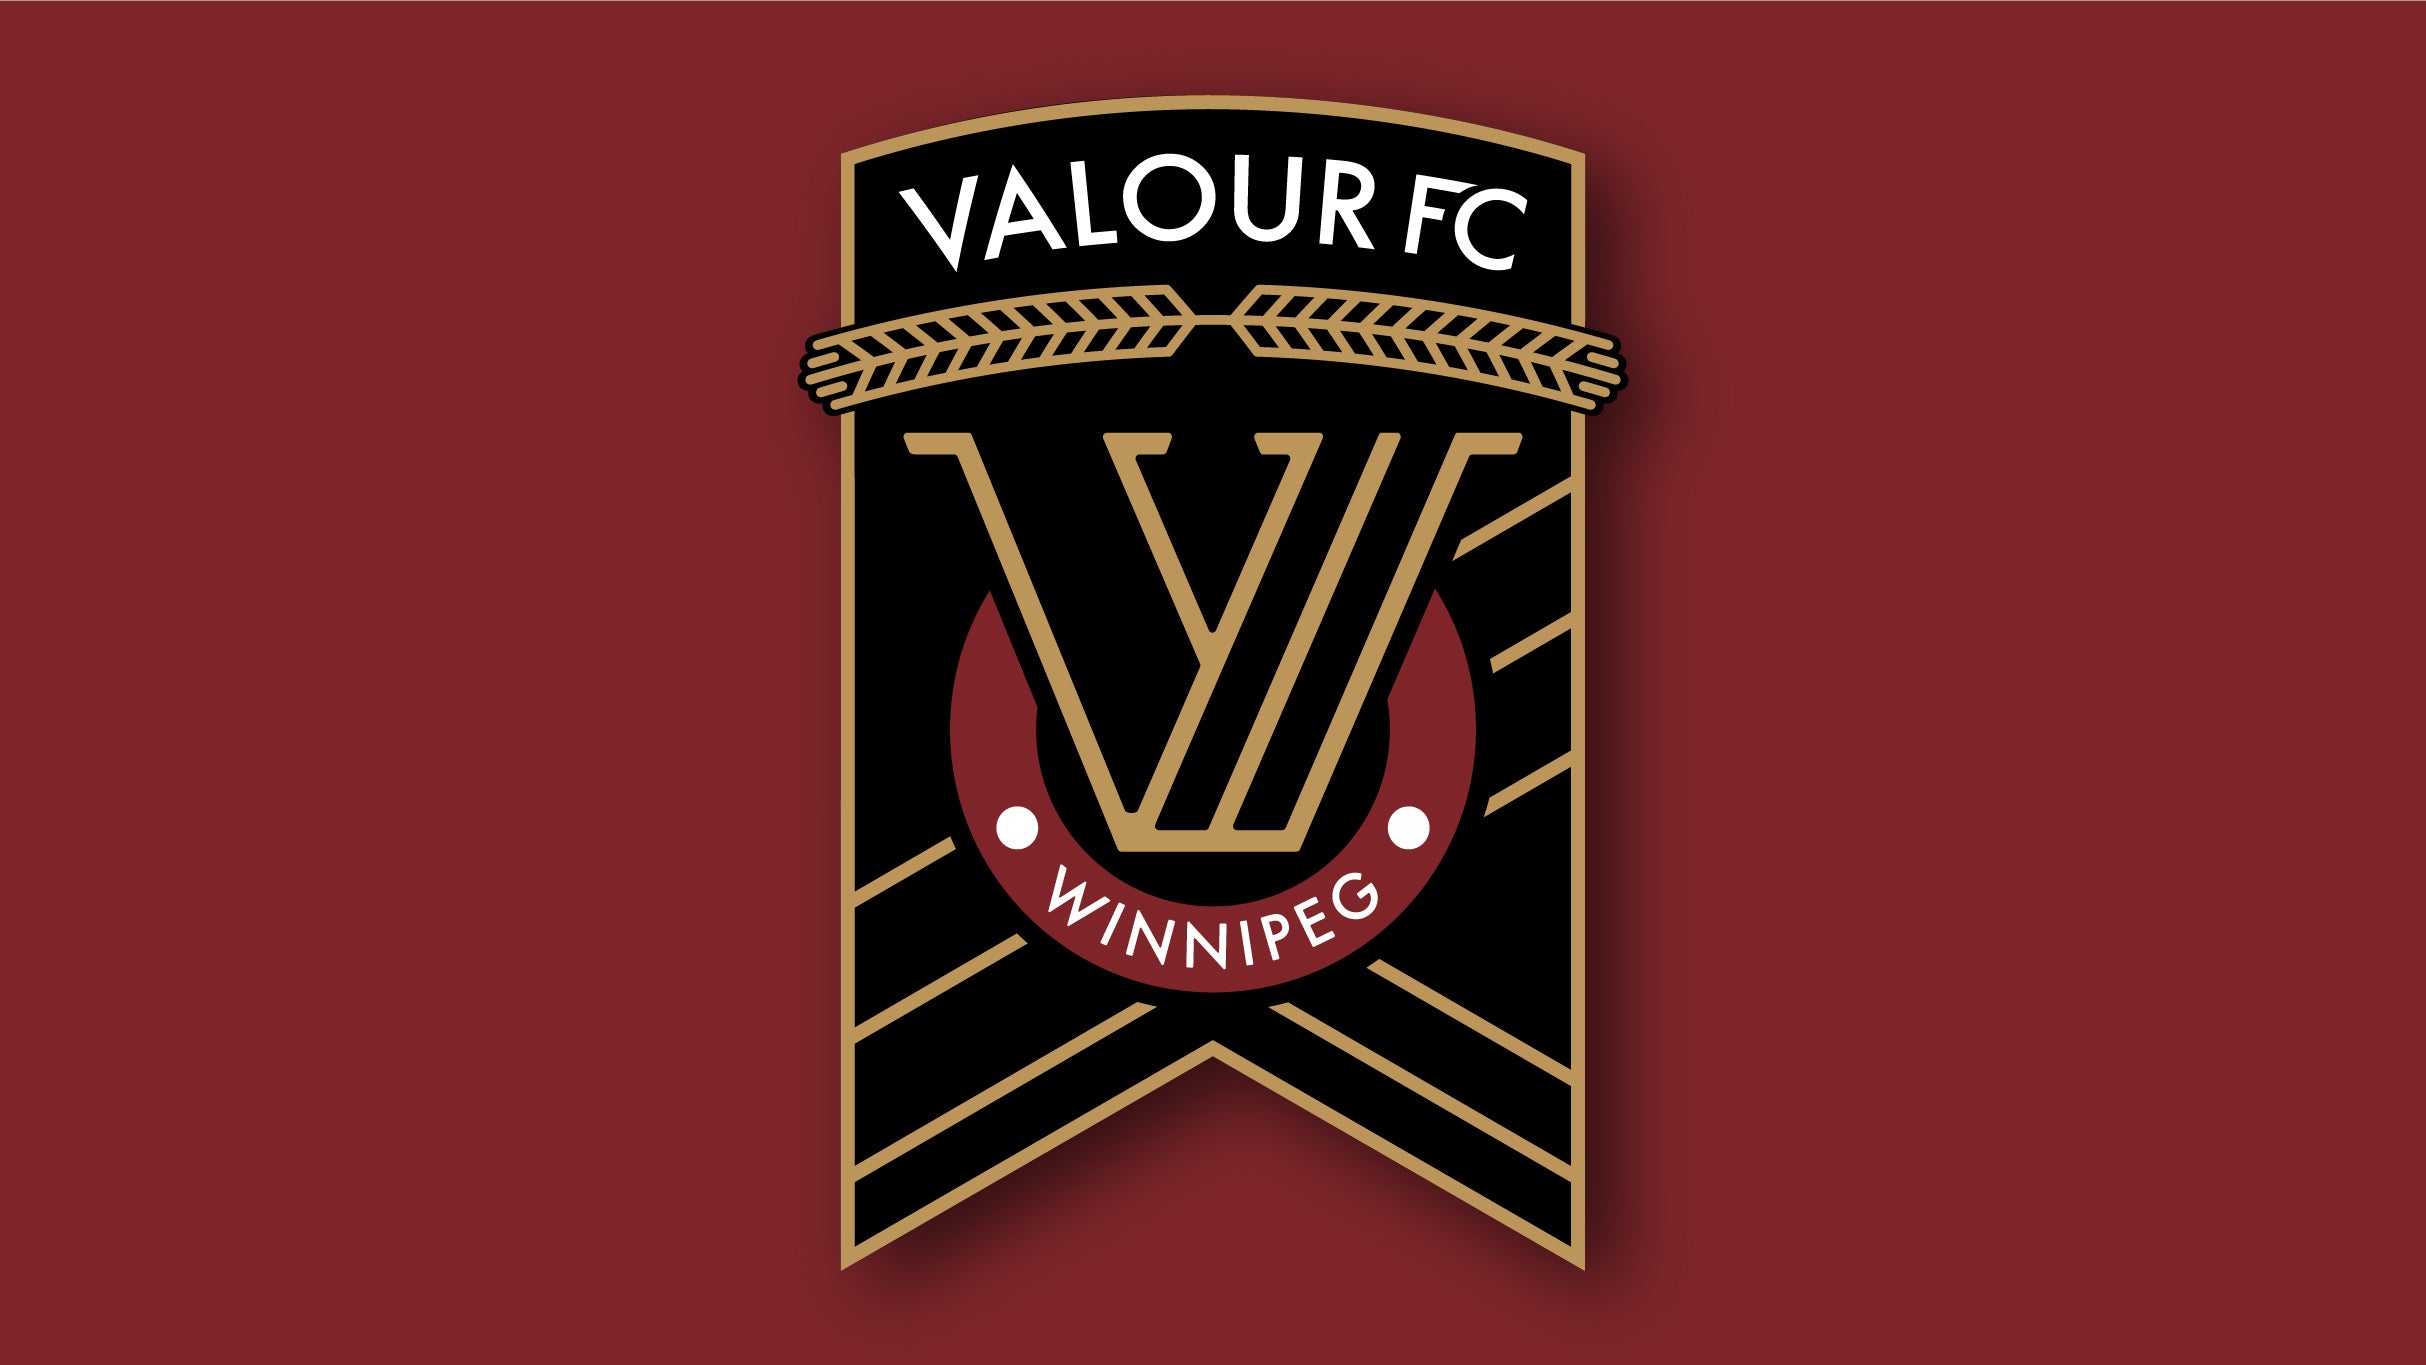 Valour FC vs. Vancouver FC presale code